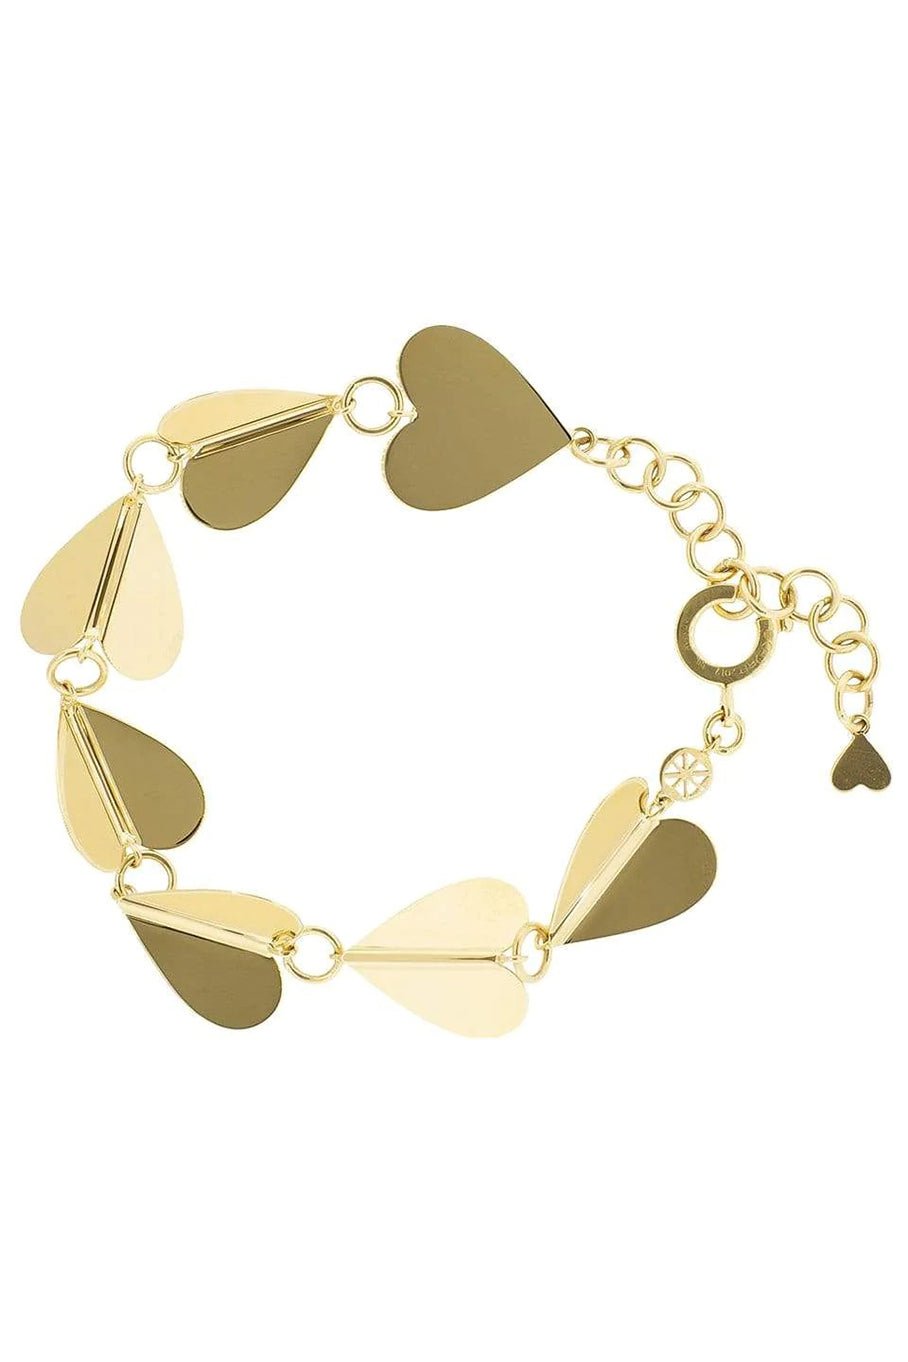 CADAR-Large Hearts Bracelet-YELLOW GOLD